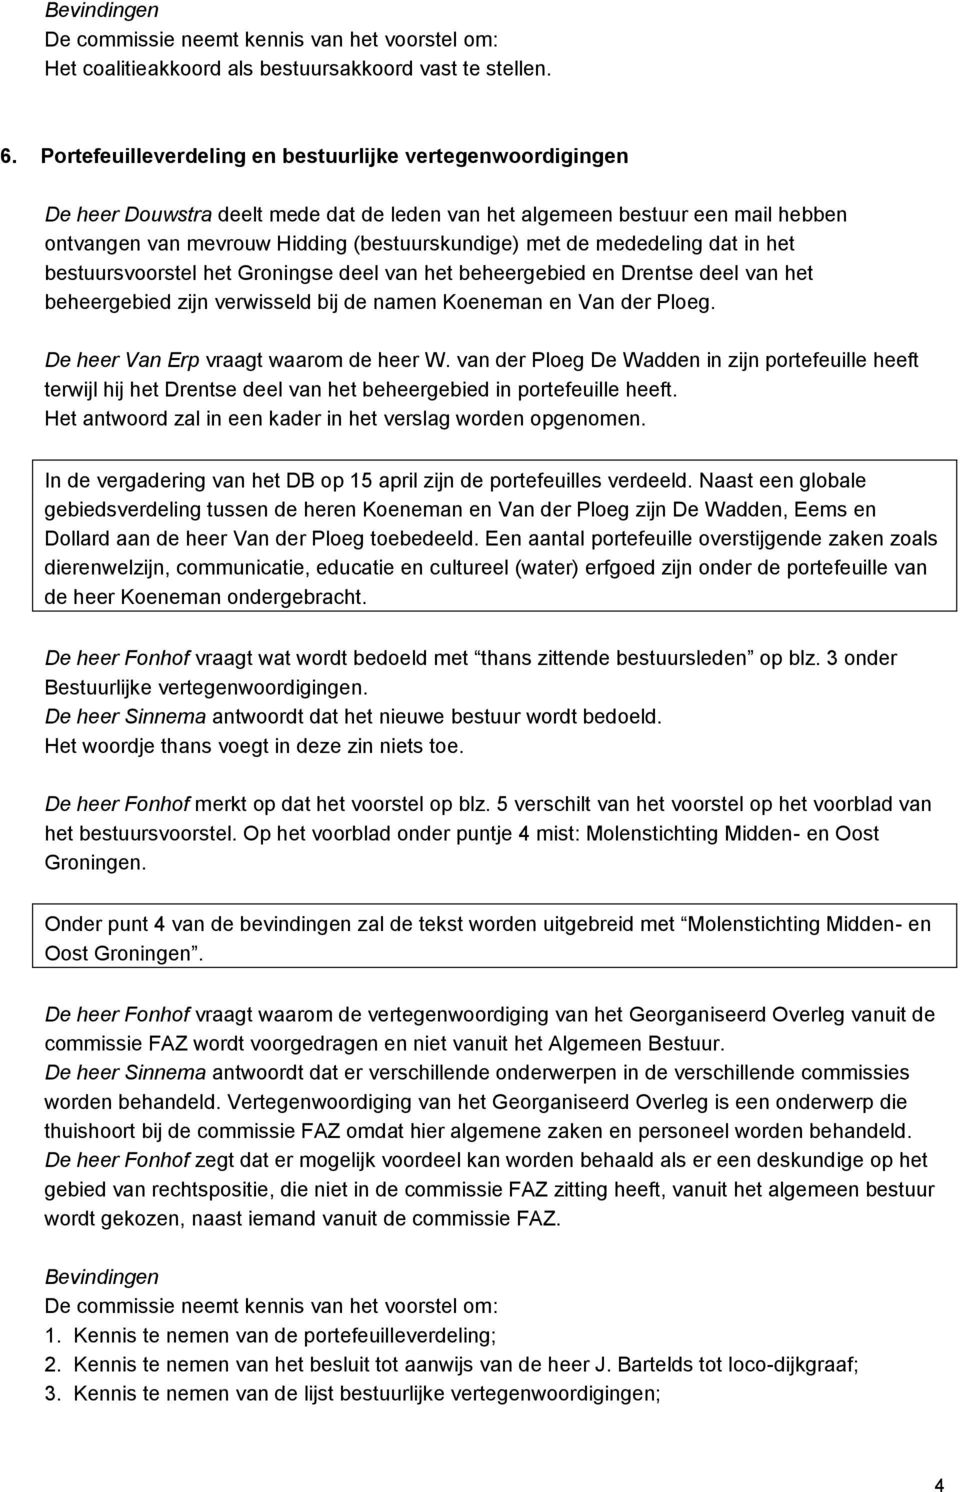 mededeling dat in het bestuursvoorstel het Groningse deel van het beheergebied en Drentse deel van het beheergebied zijn verwisseld bij de namen Koeneman en Van der Ploeg.